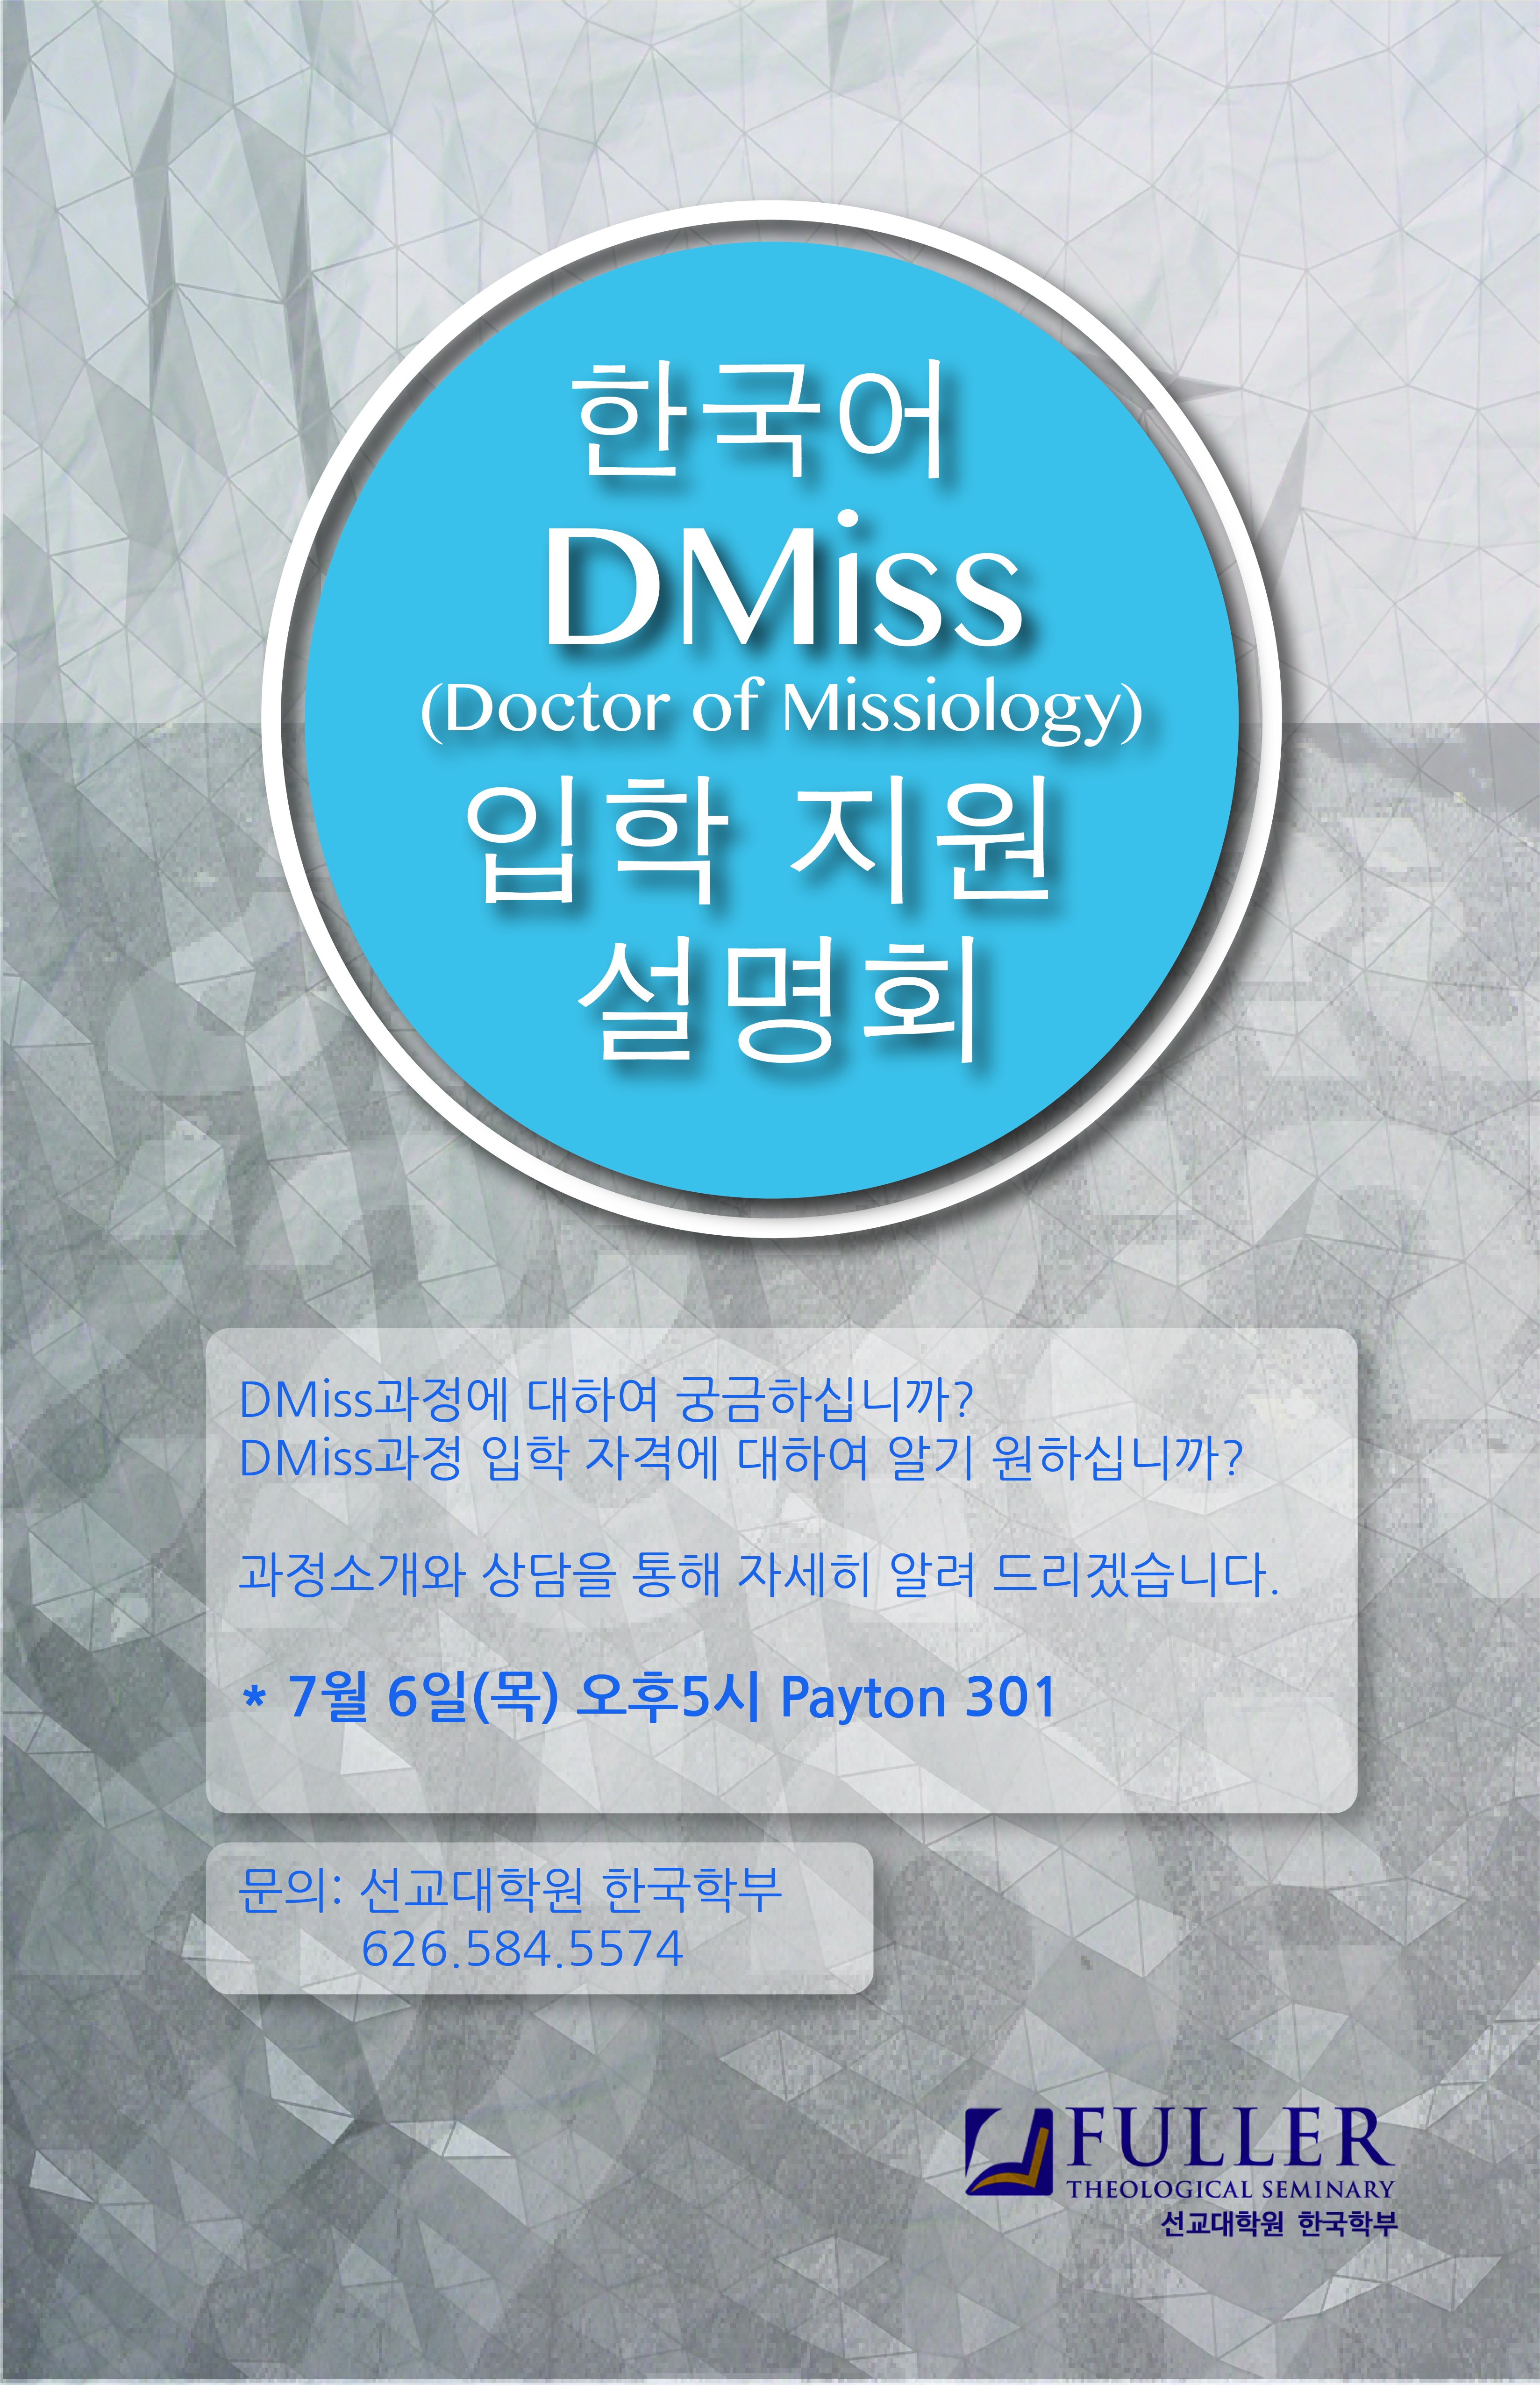 DMiss Info Meeting.jpg